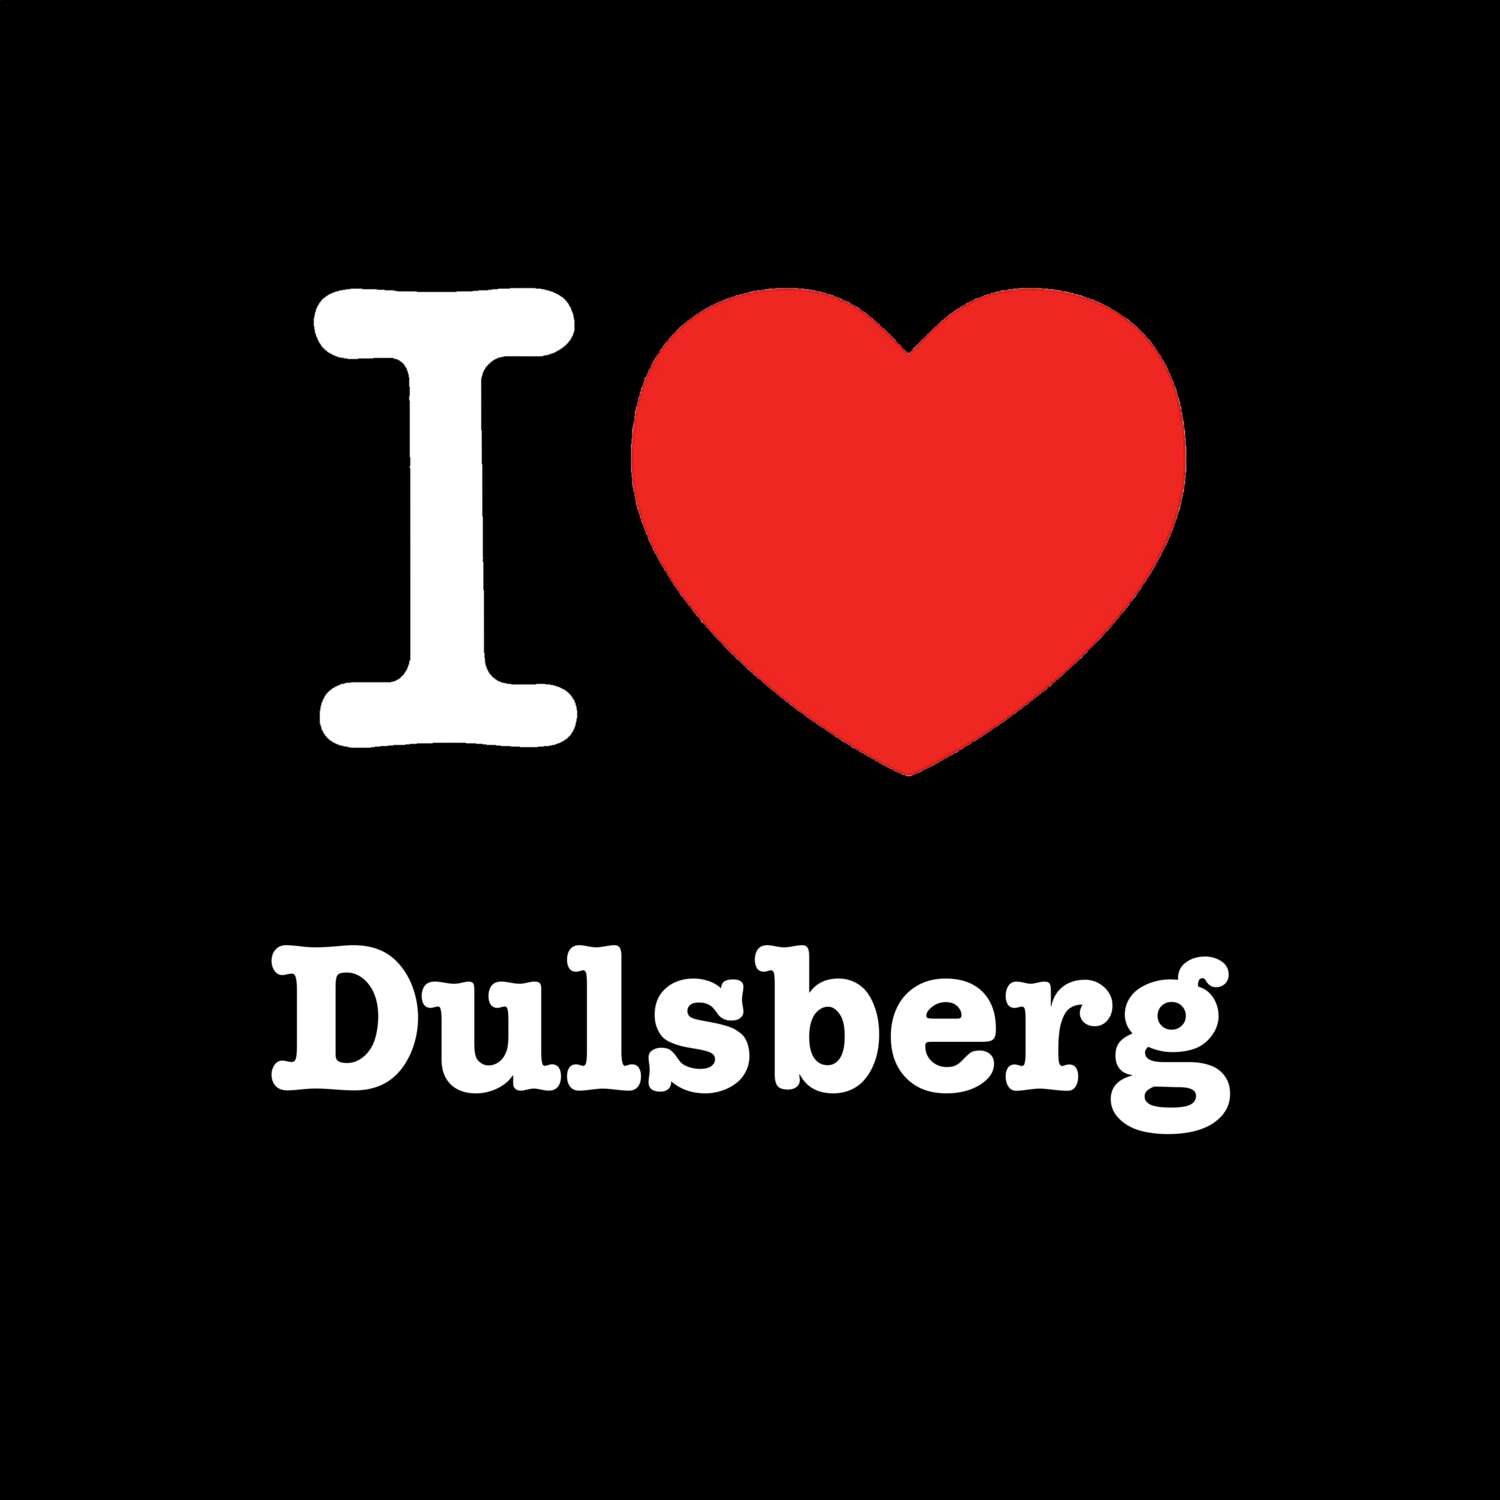 Dulsberg T-Shirt »I love«